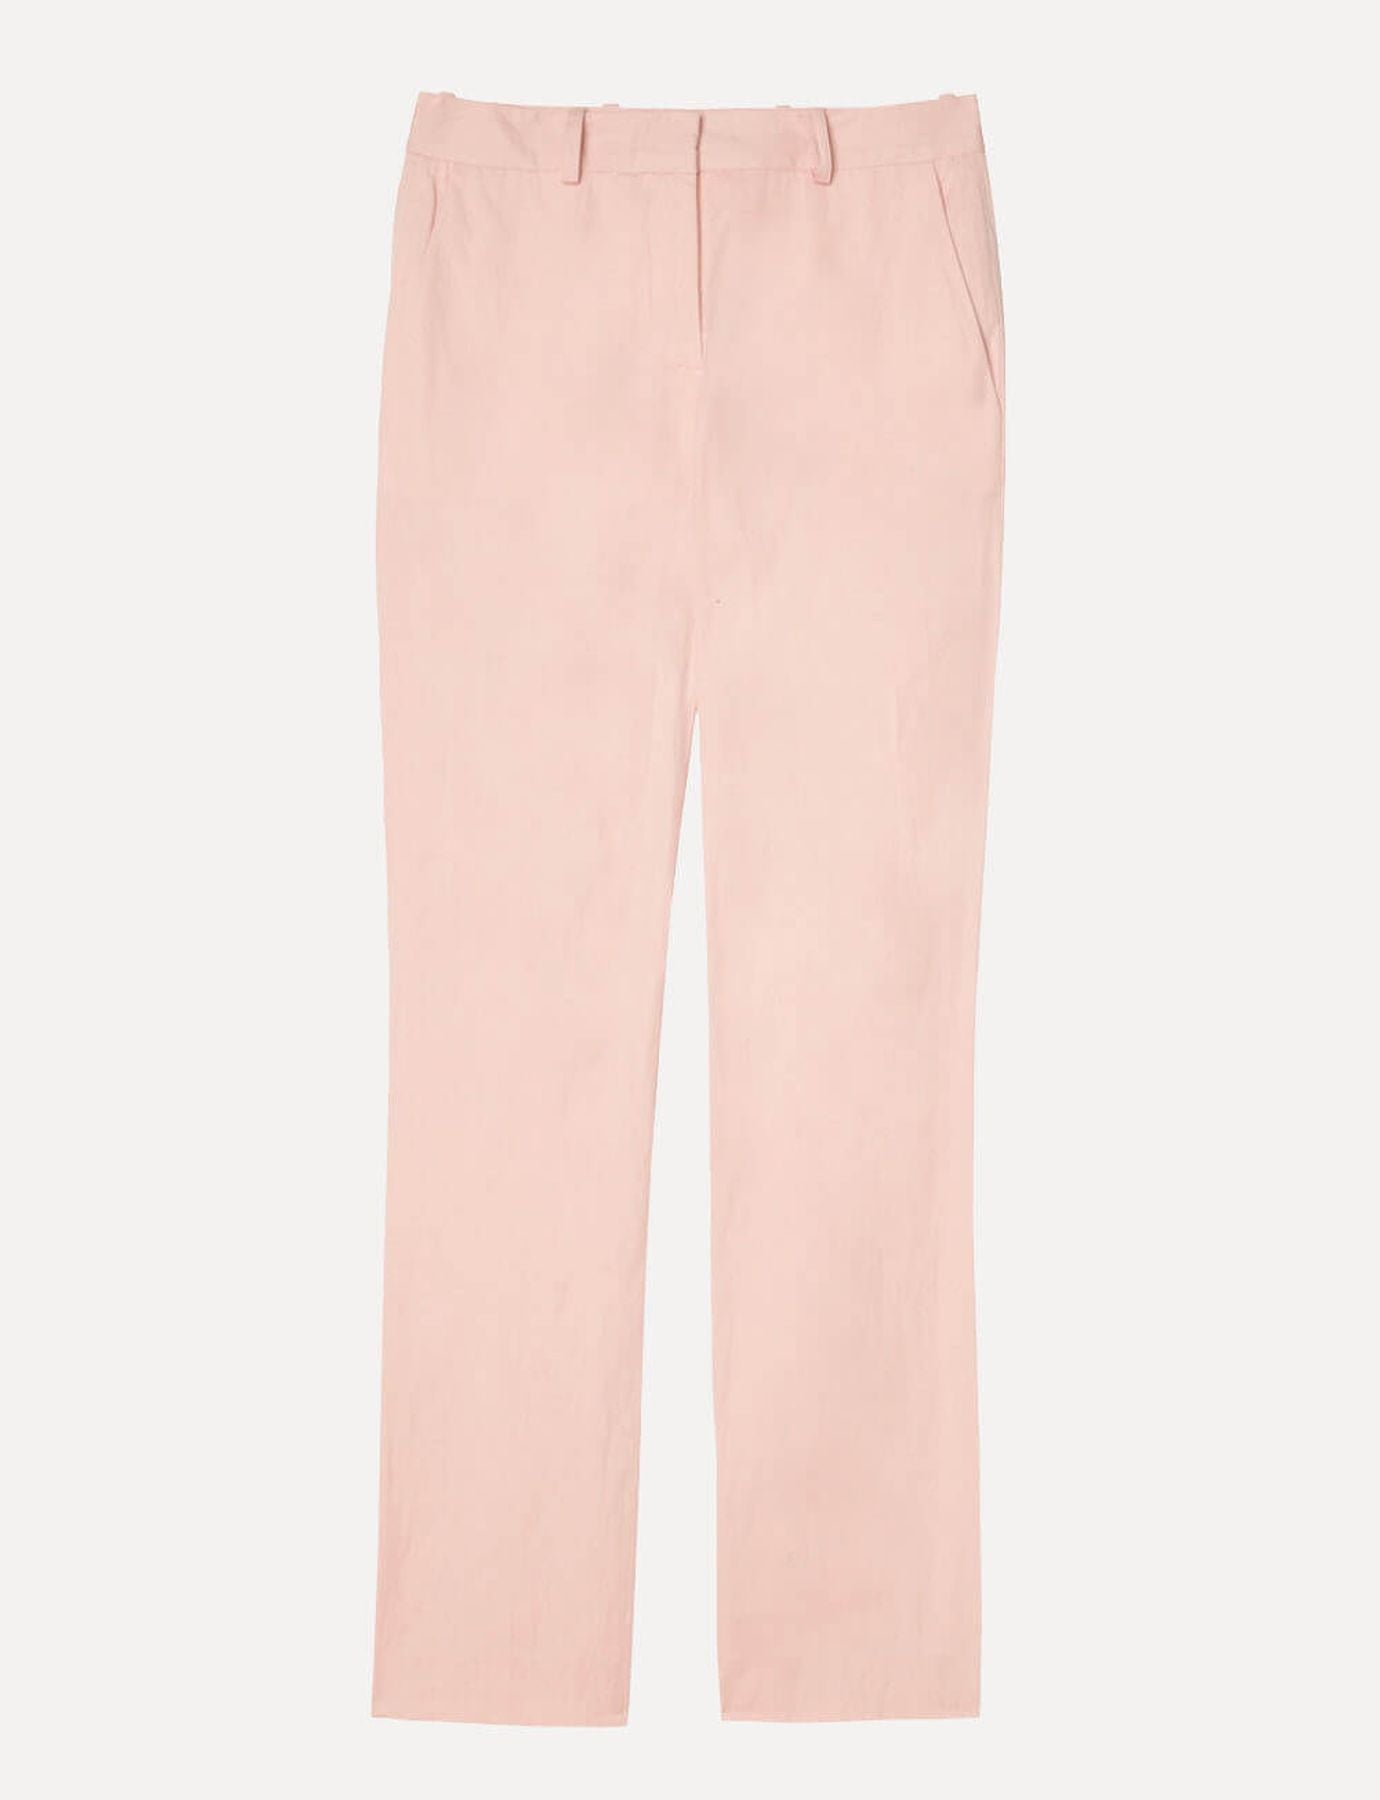 pantaloni-anatole-rosa-chiaro